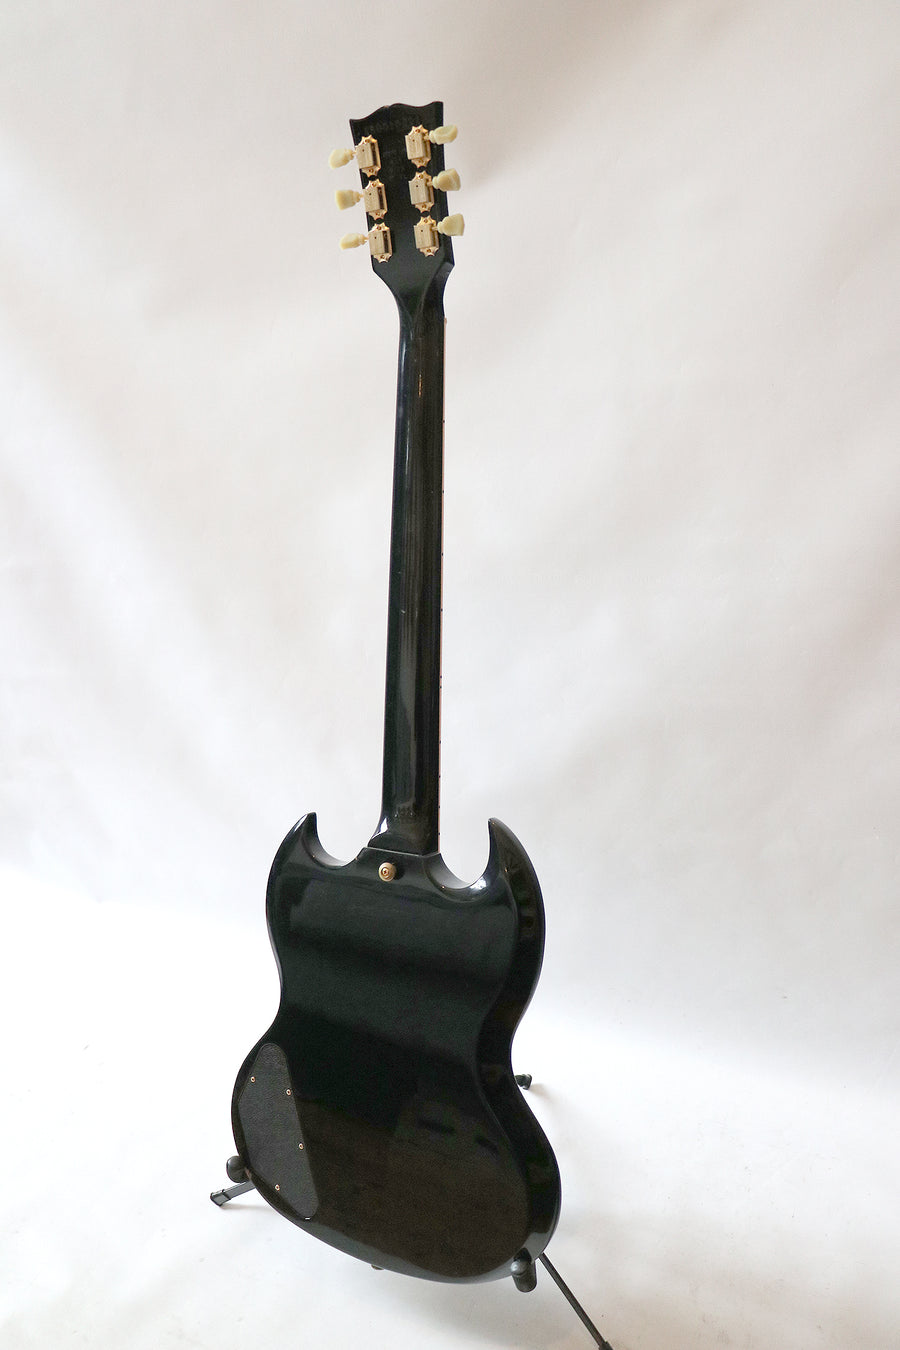 Gibson SG Standard Ebony 3 Pickup Sideways Vibrola 2011